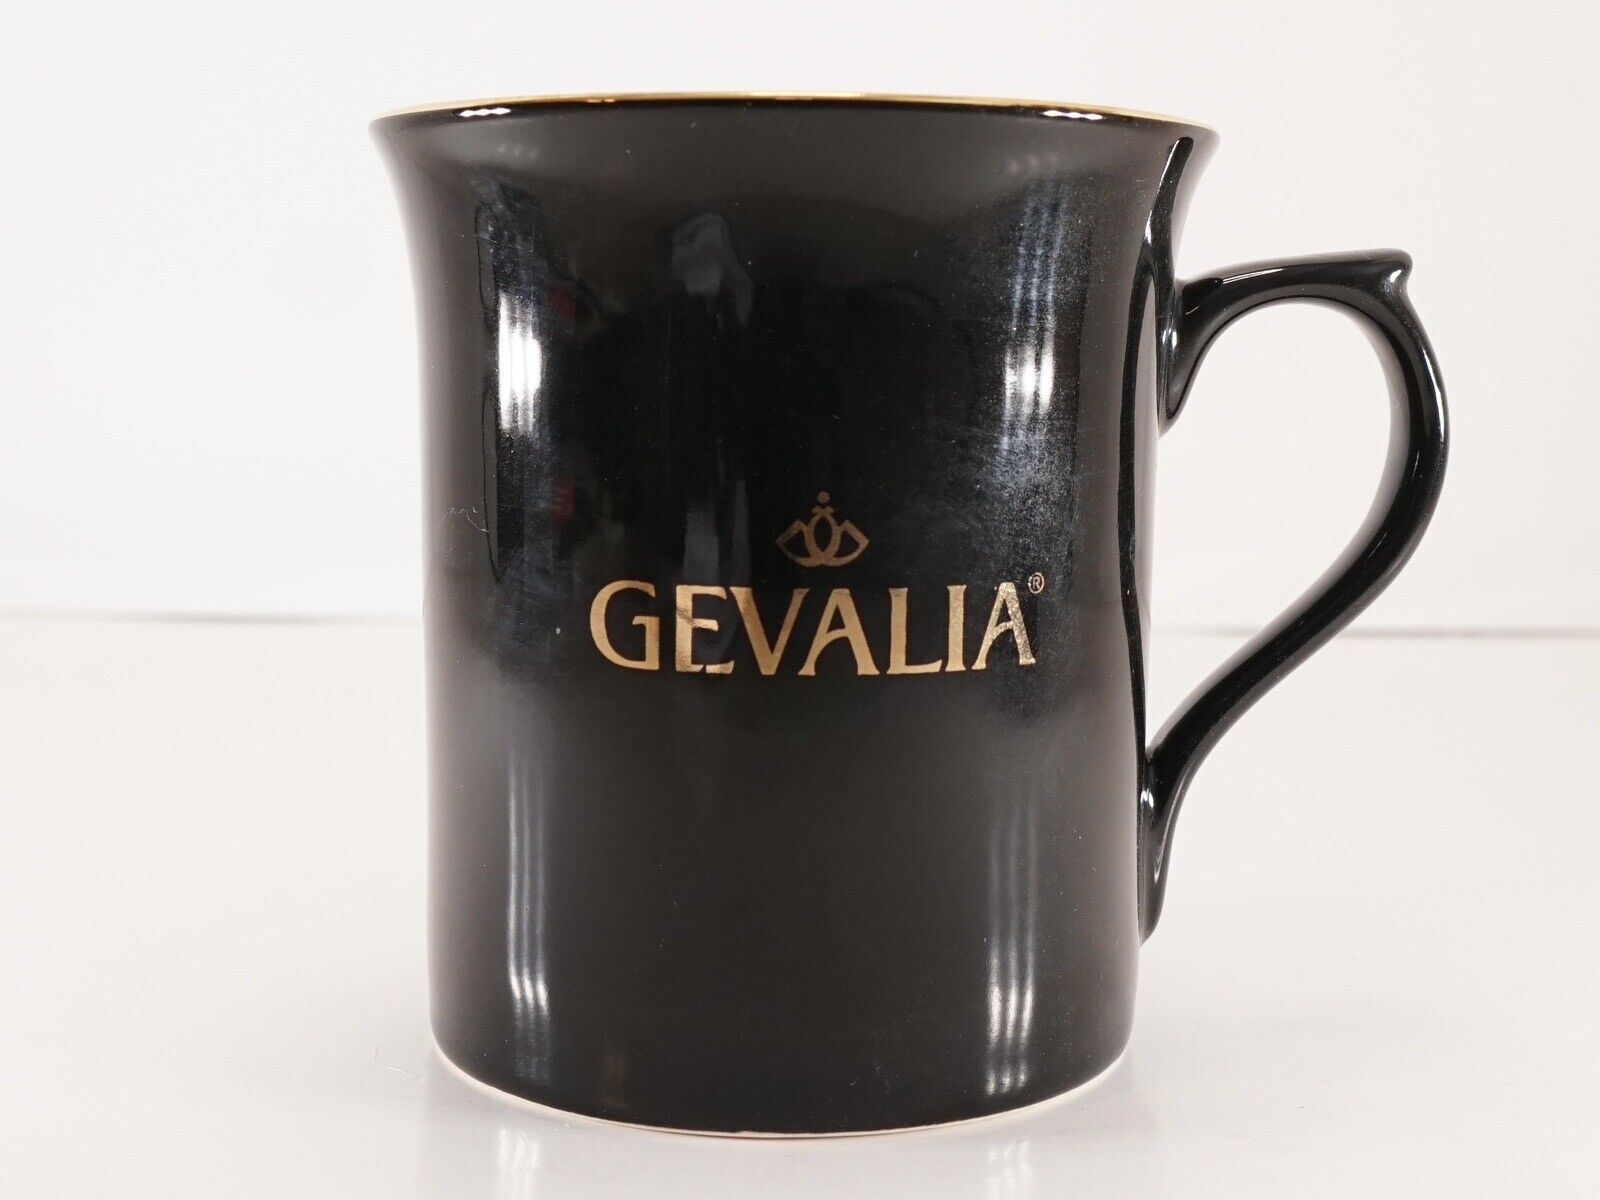 GEVALIA Porcelain Coffee Mug Tea Cup Black Gold Trim Wording MINT